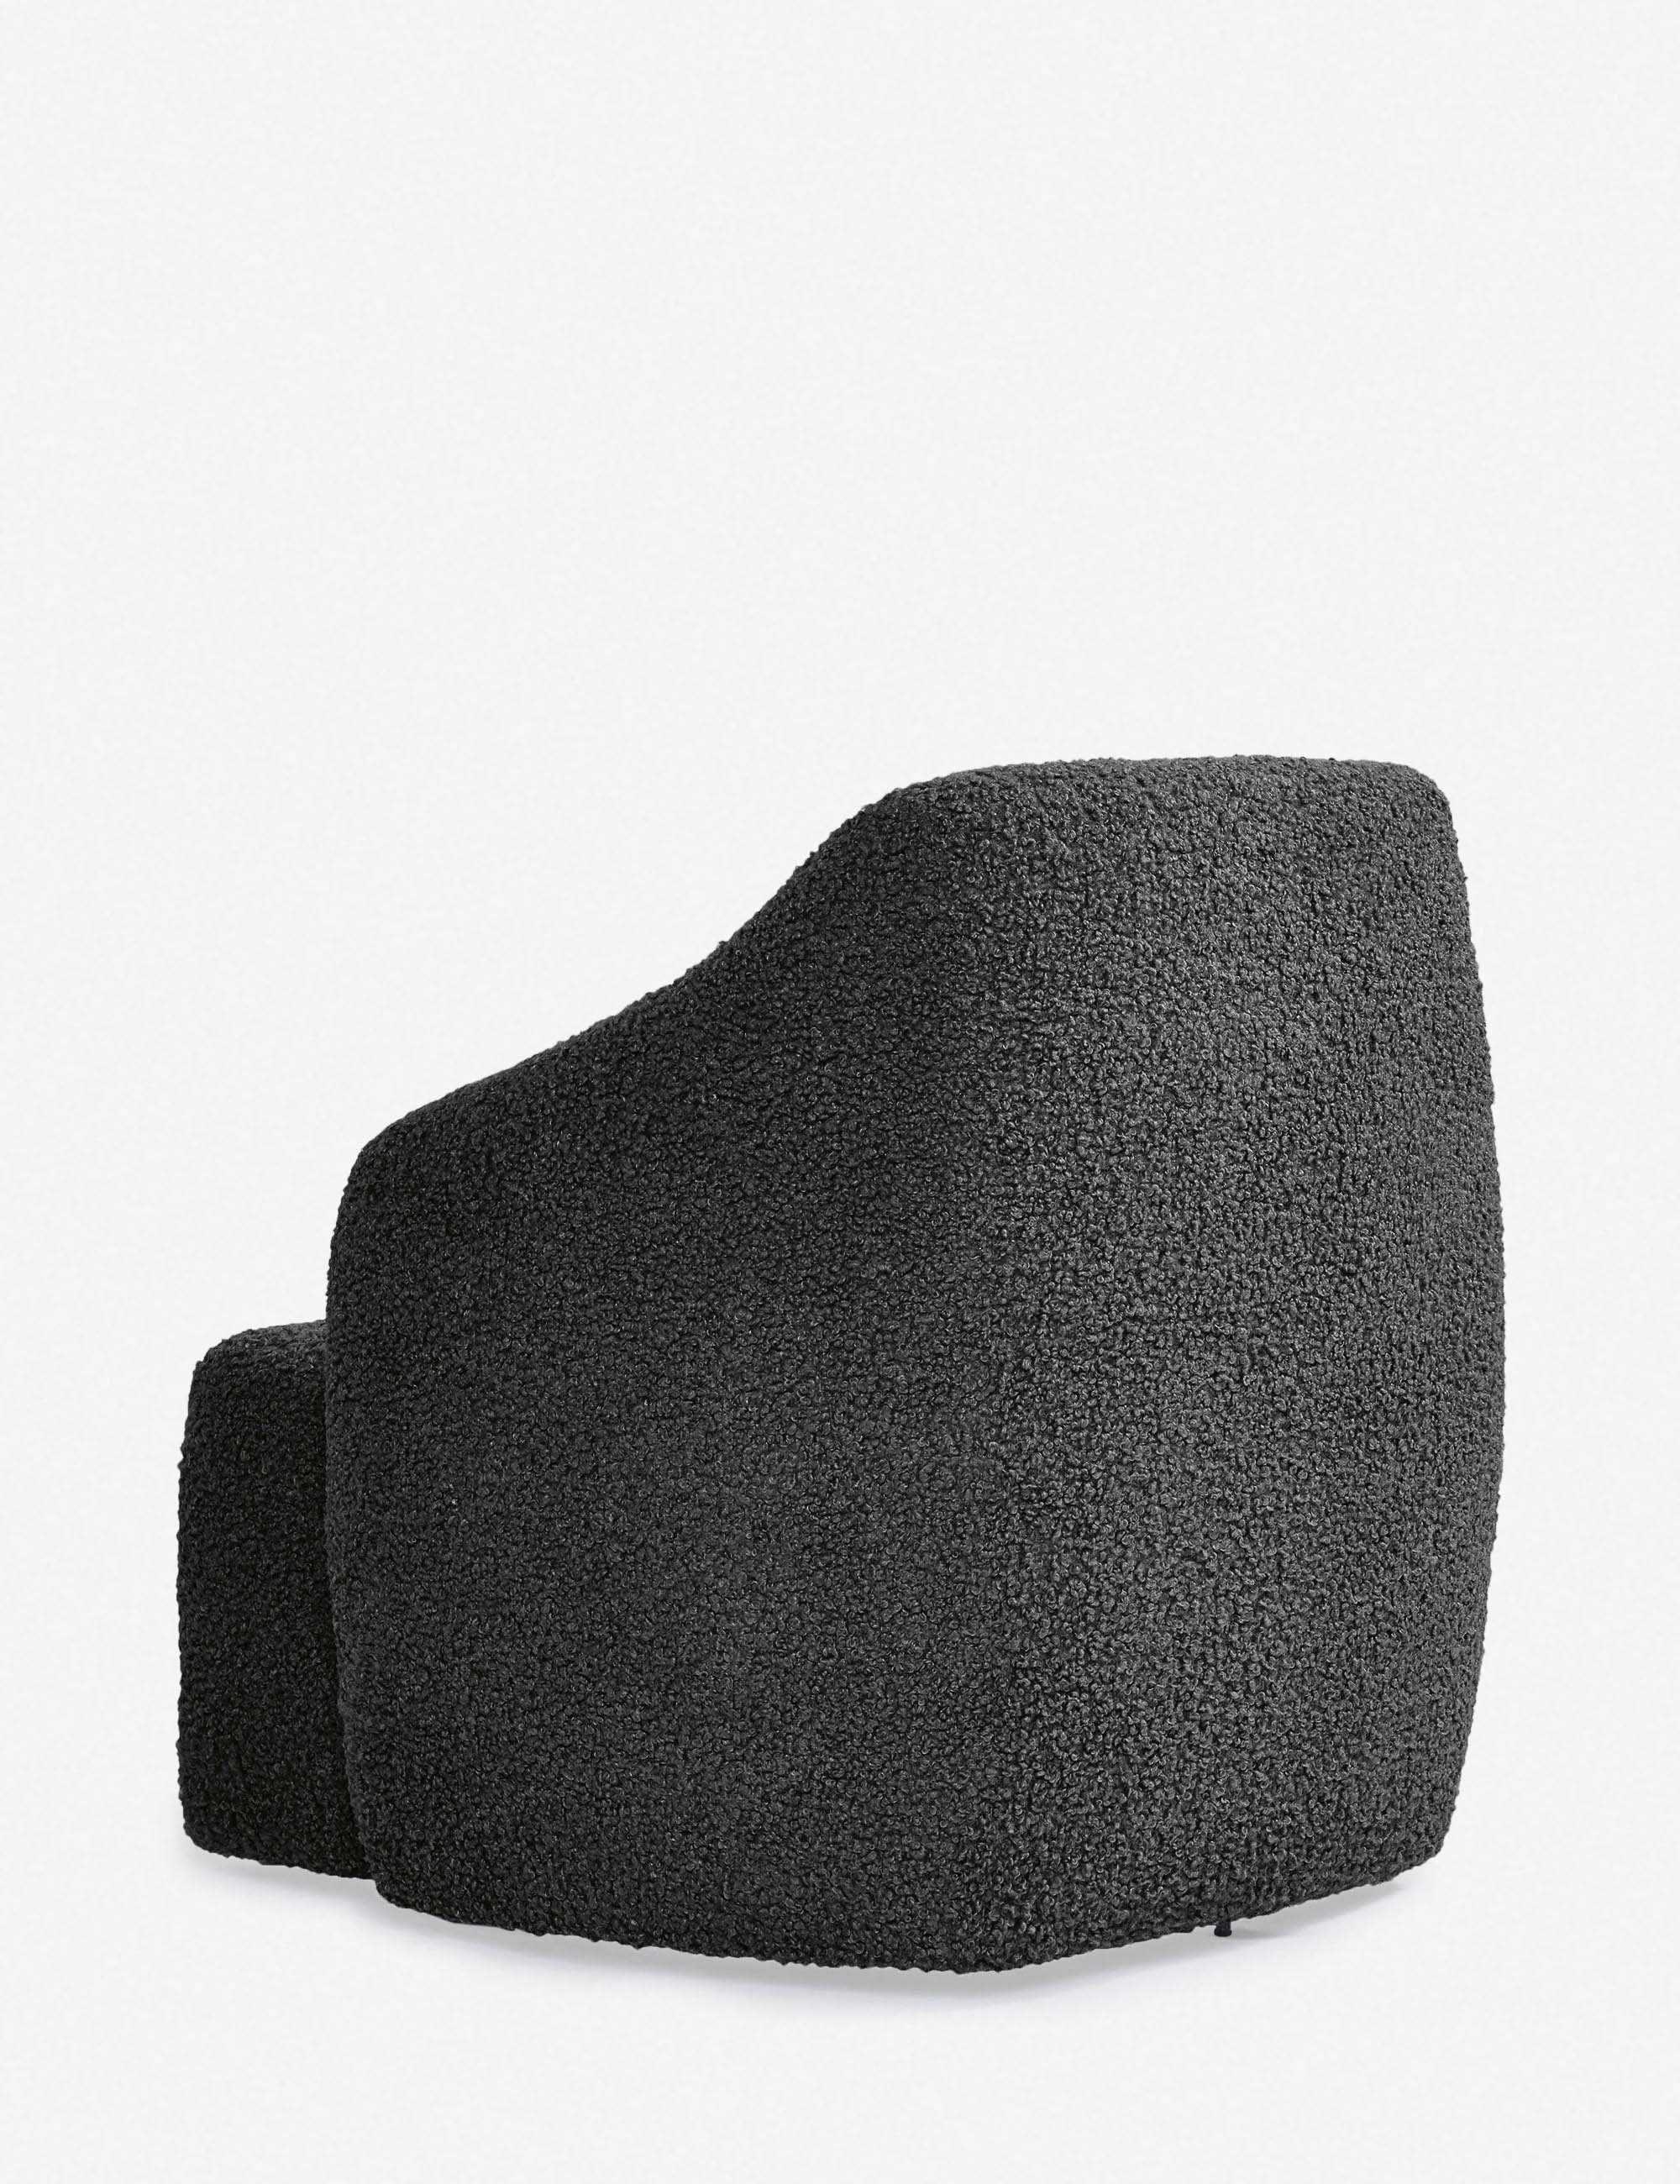 Tobi Swivel Chair - Image 5